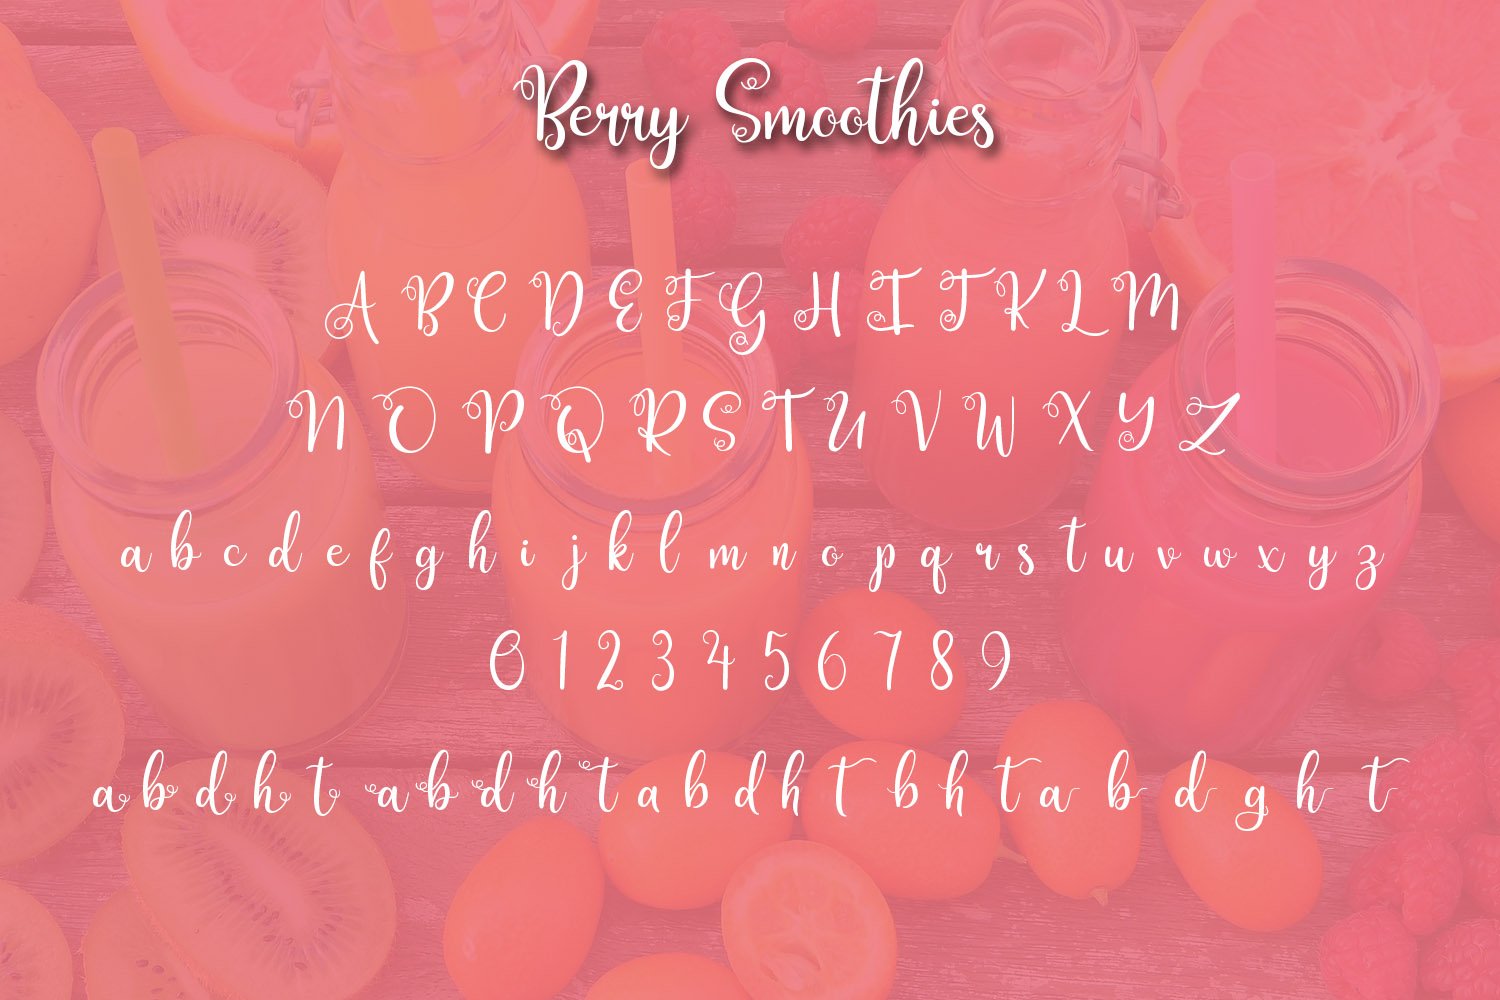 berry smoothies 2 8